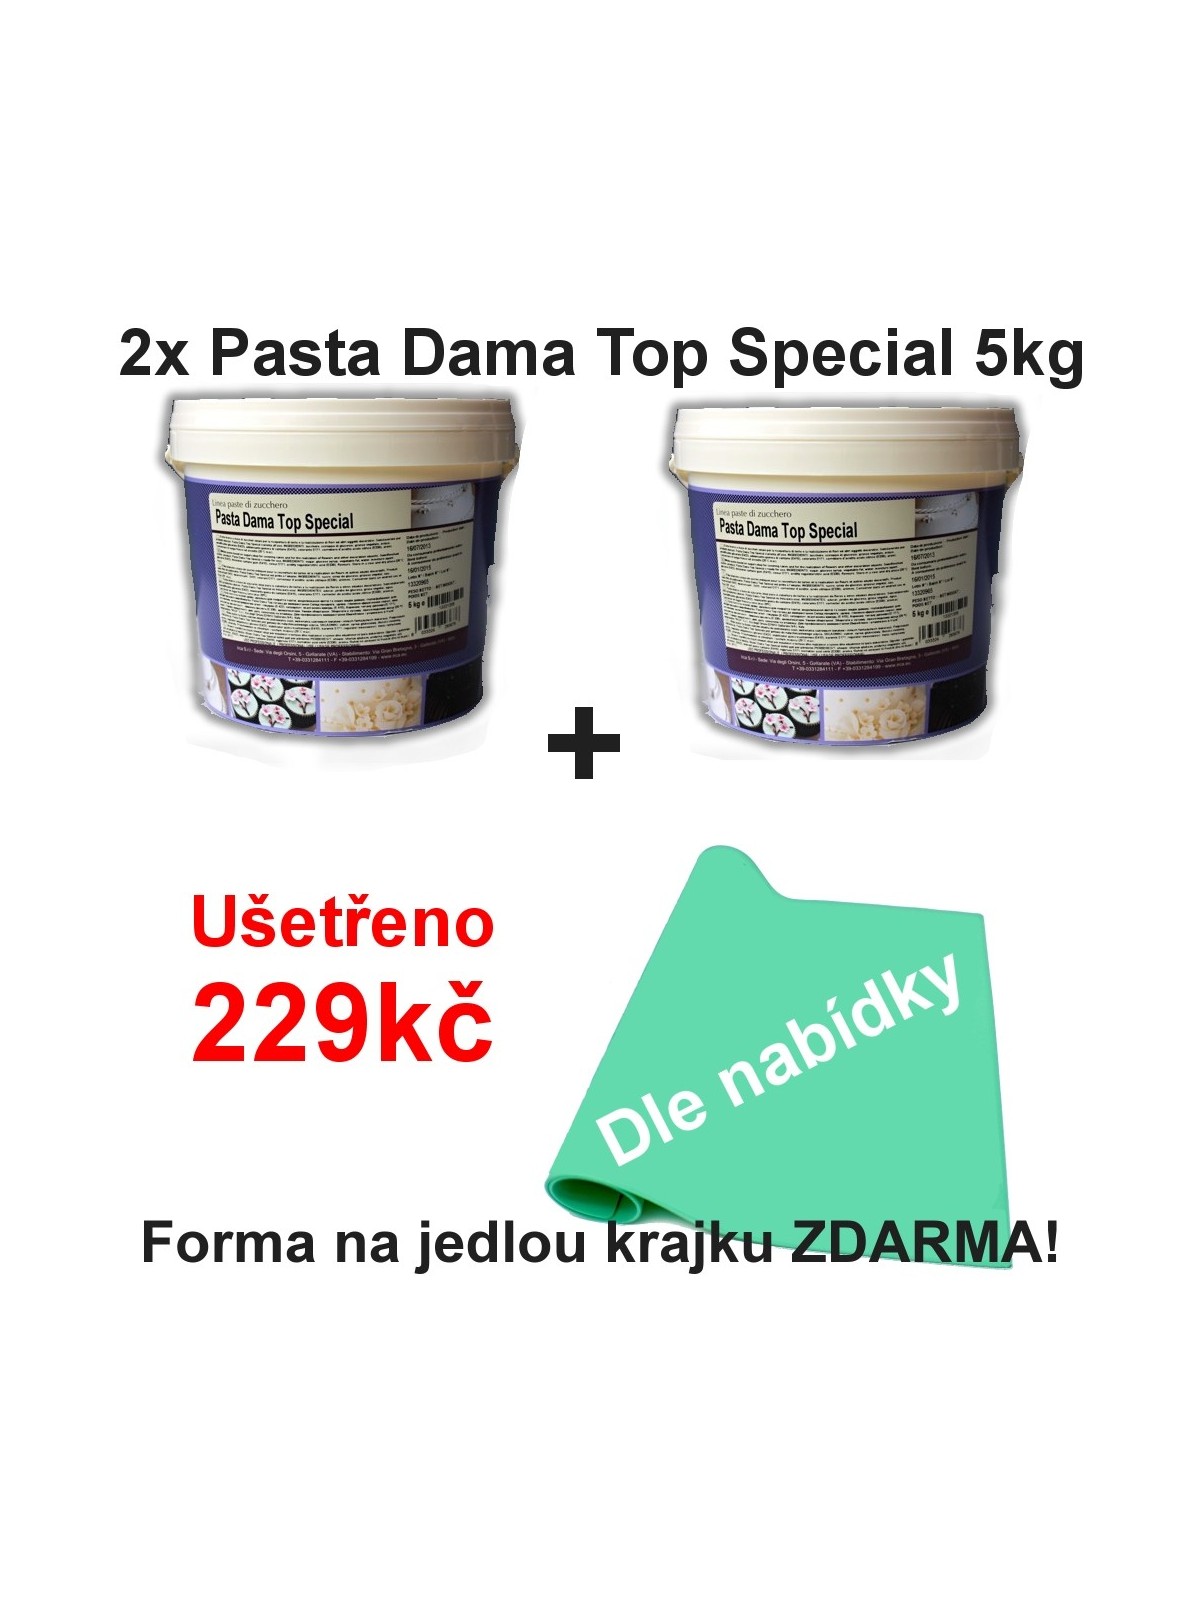 2x Pasta Dama TOP Spezial - 5 kg + siliconmatt for edible lace